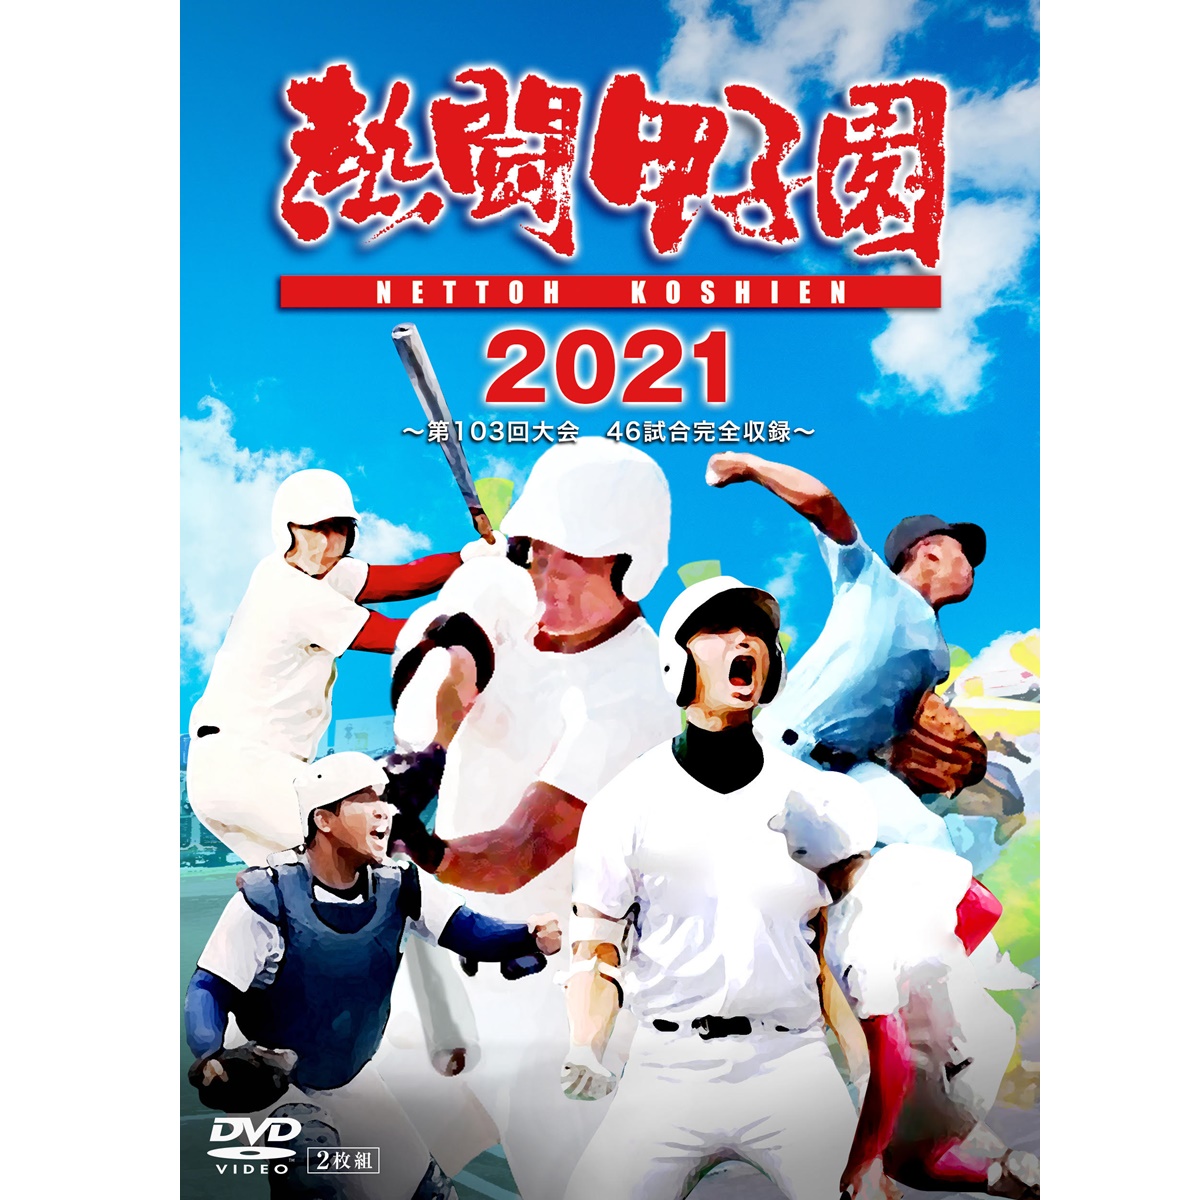 DVD「熱闘甲子園2021」